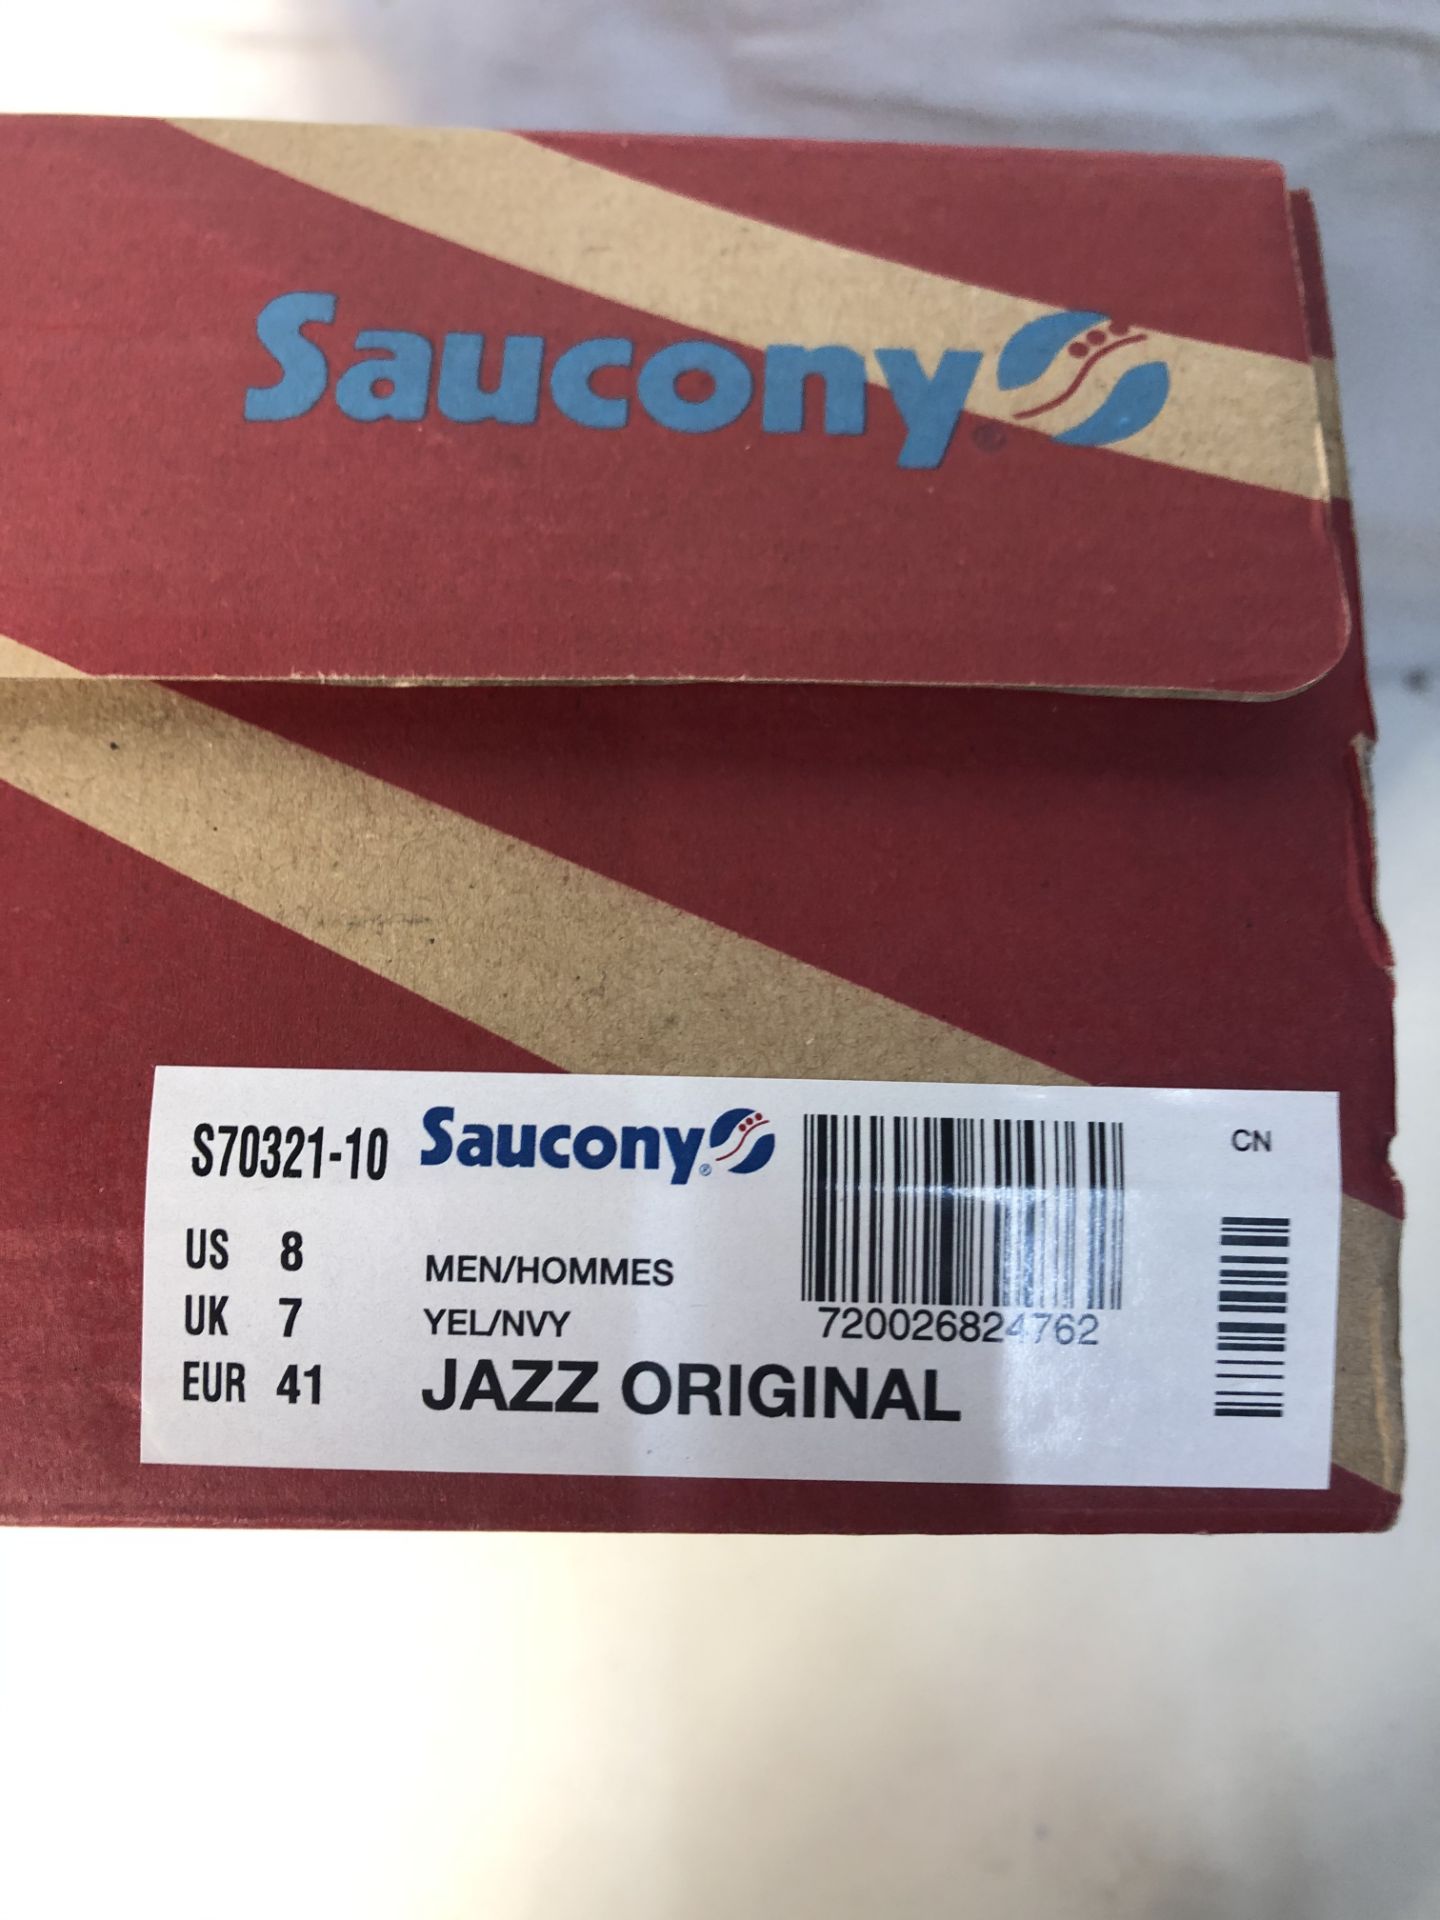 1 x Saucony Sneaker Jazz Original Vintage Yellow 41 Yellow - Image 2 of 2